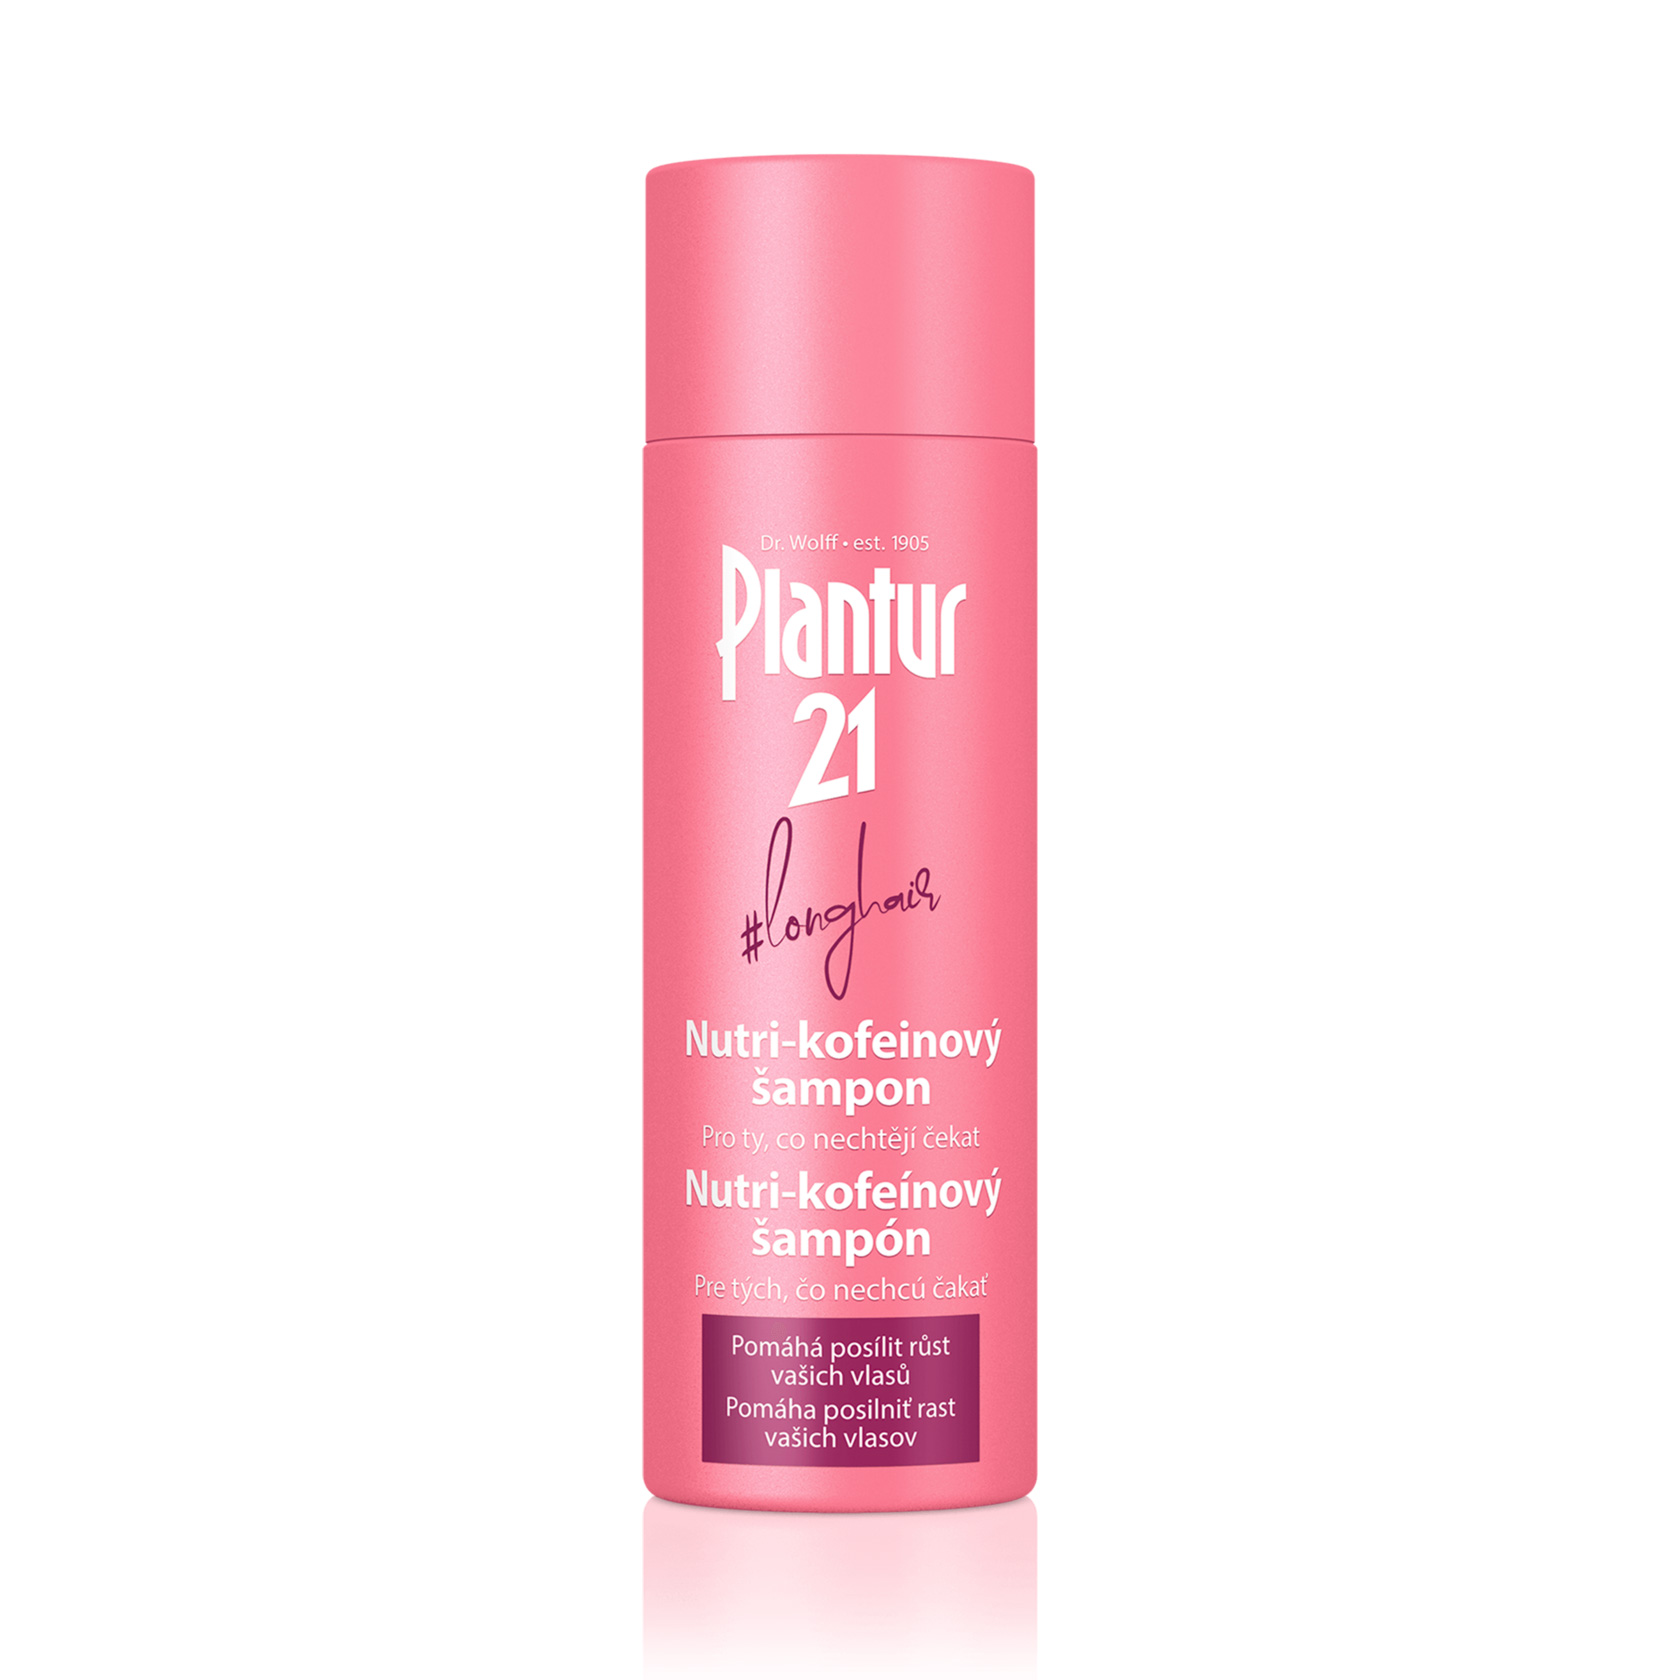 Plantur39 Longhair Nutri-kofeinový šampon - Plantur 21